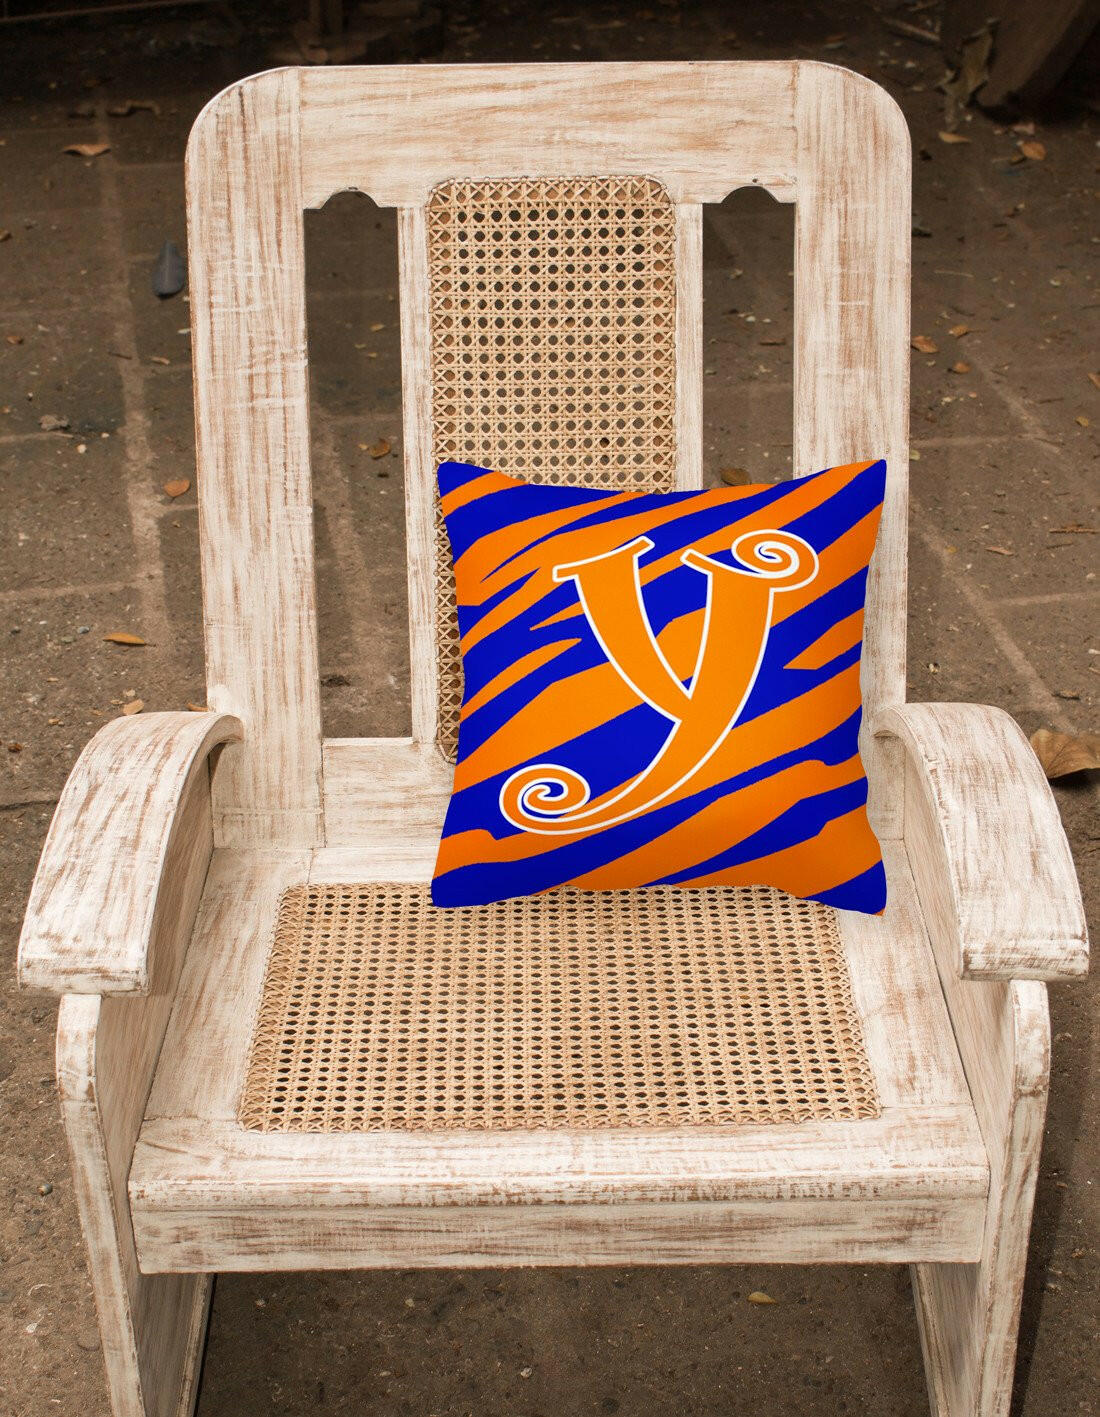 Monogram Initial Y Tiger Stripe Blue and Orange Decorative Canvas Fabric Pillow - the-store.com